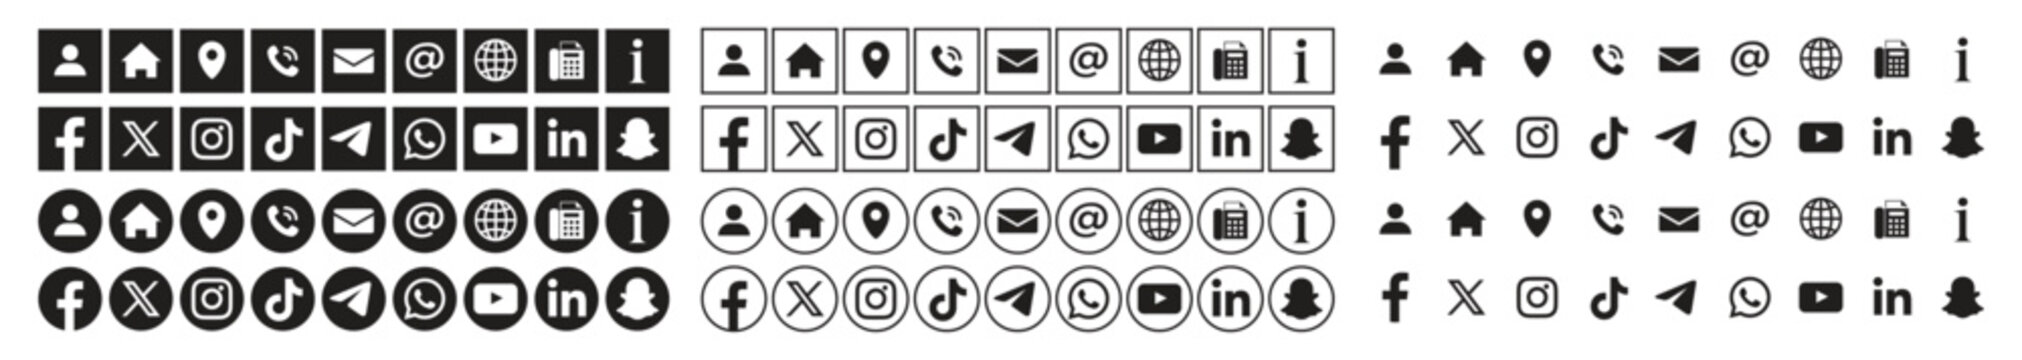 Set of popular social media logo with contact icon. Contact and social media icons.editorial set. Facebook, instagram, twitter, youtube, telegram